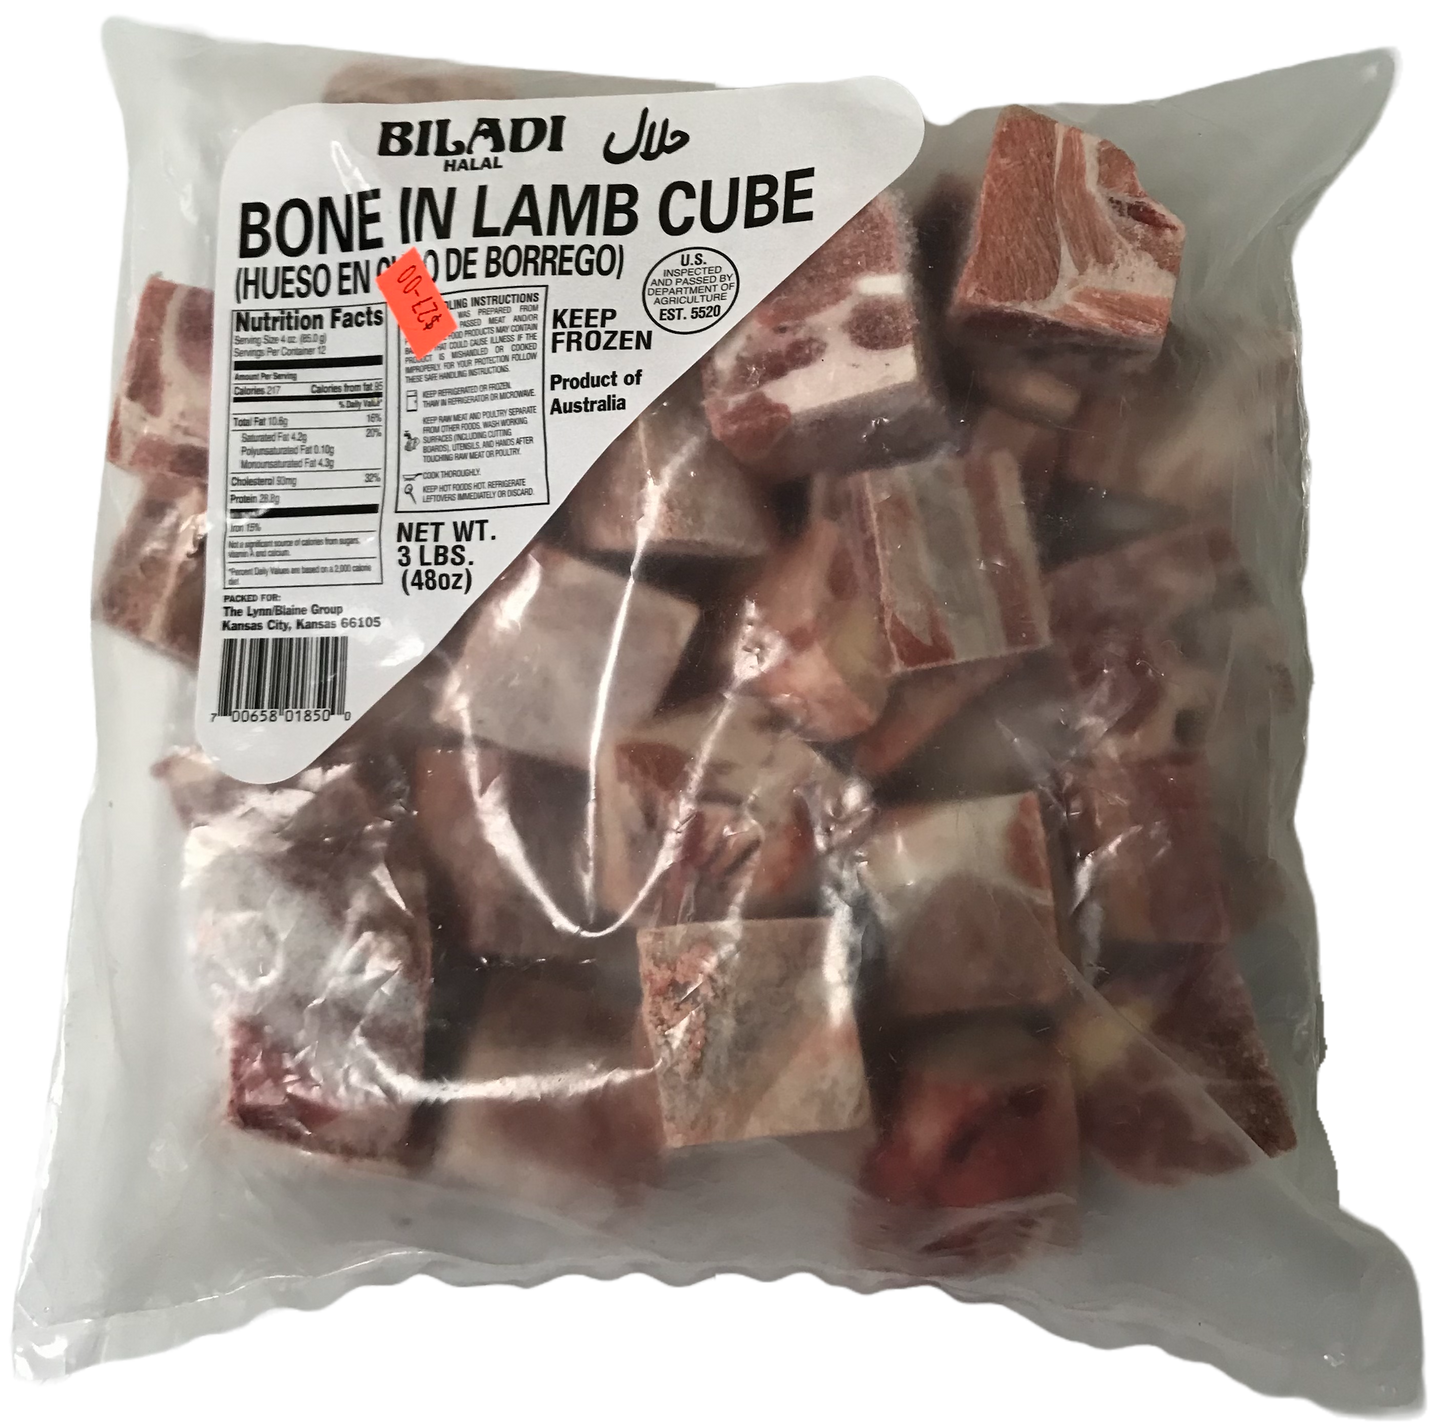 Biladi Halal Bone in Lamb Cubes Frozen 3lbs